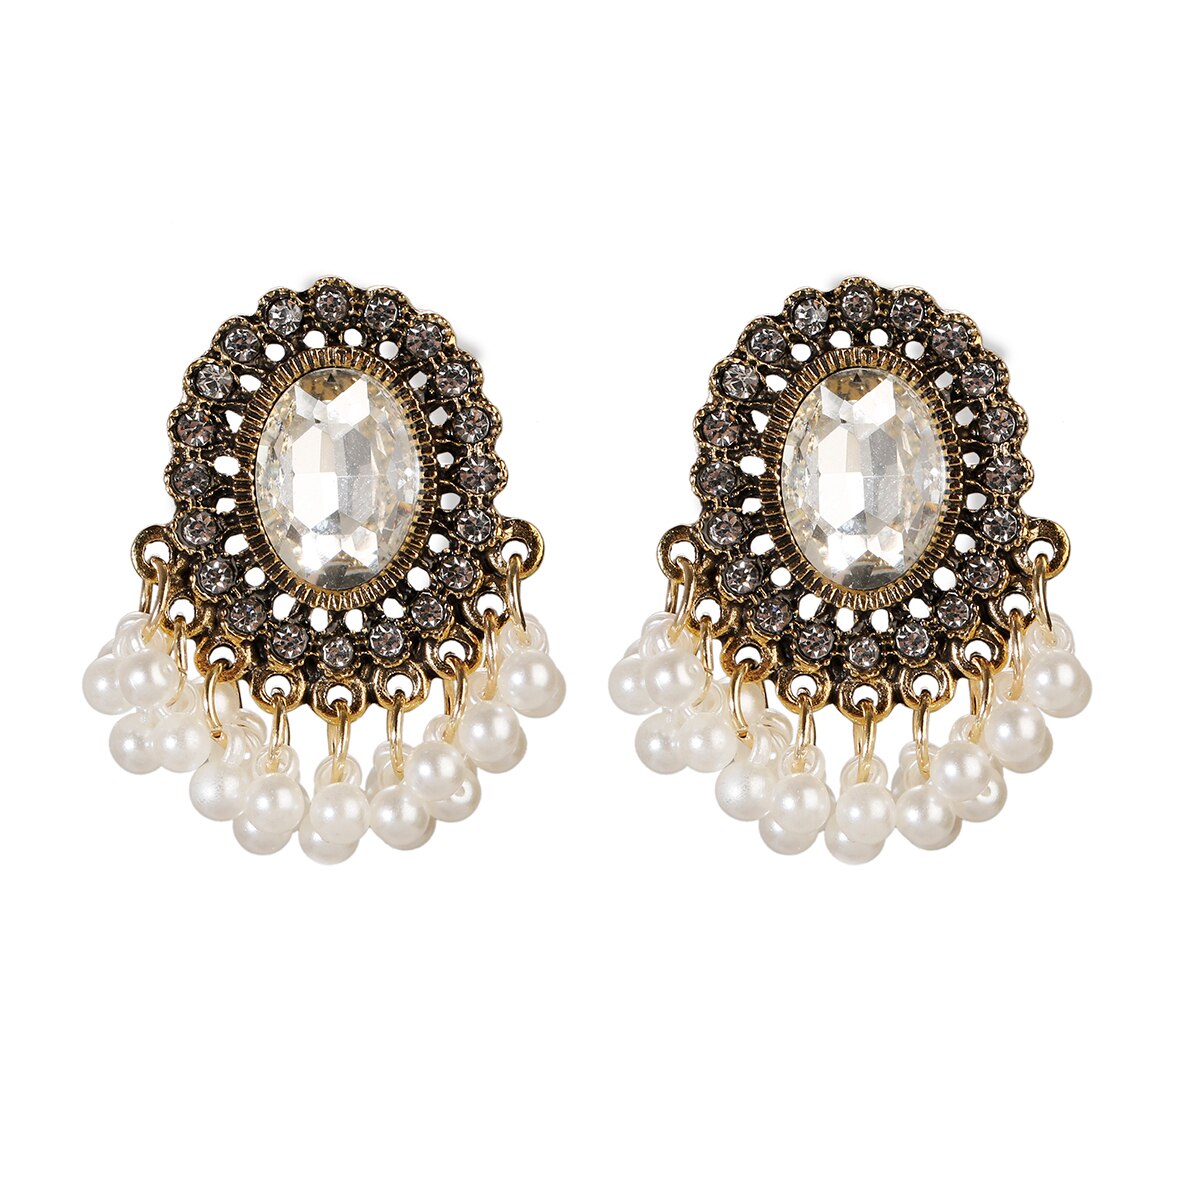 Classic-Blue-Crystal-Indian-Earrings-For-Women-Pendientes-Luxury-Pearl-Tassel-Earrings-Jewelry-Brinc-1005003753178643-5